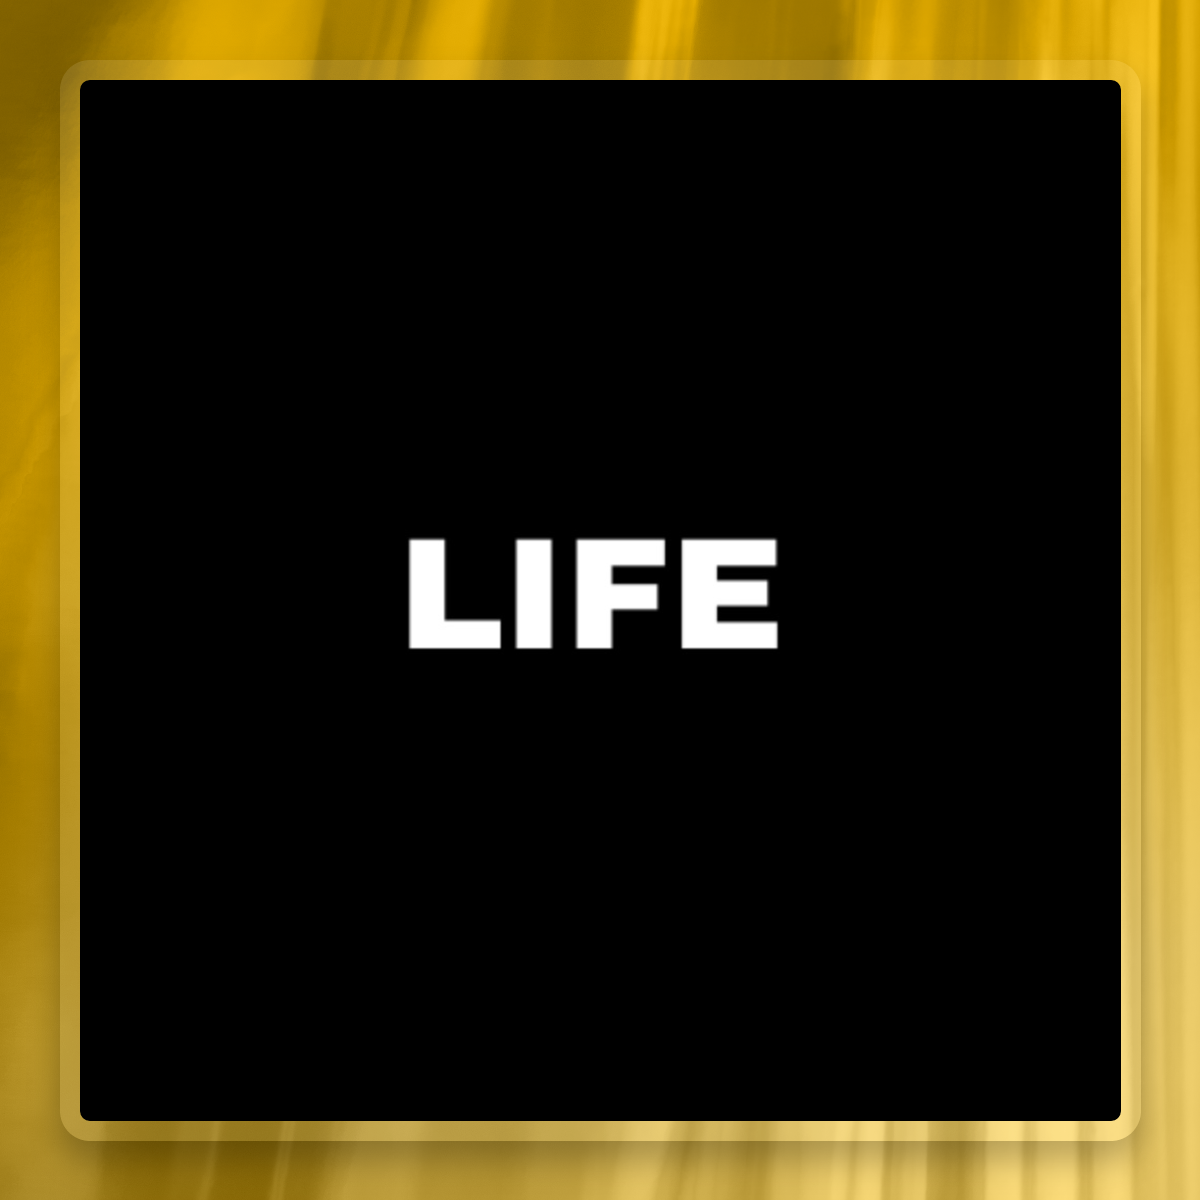 Life - Track 1 (untitled / unmixed / unmastered)